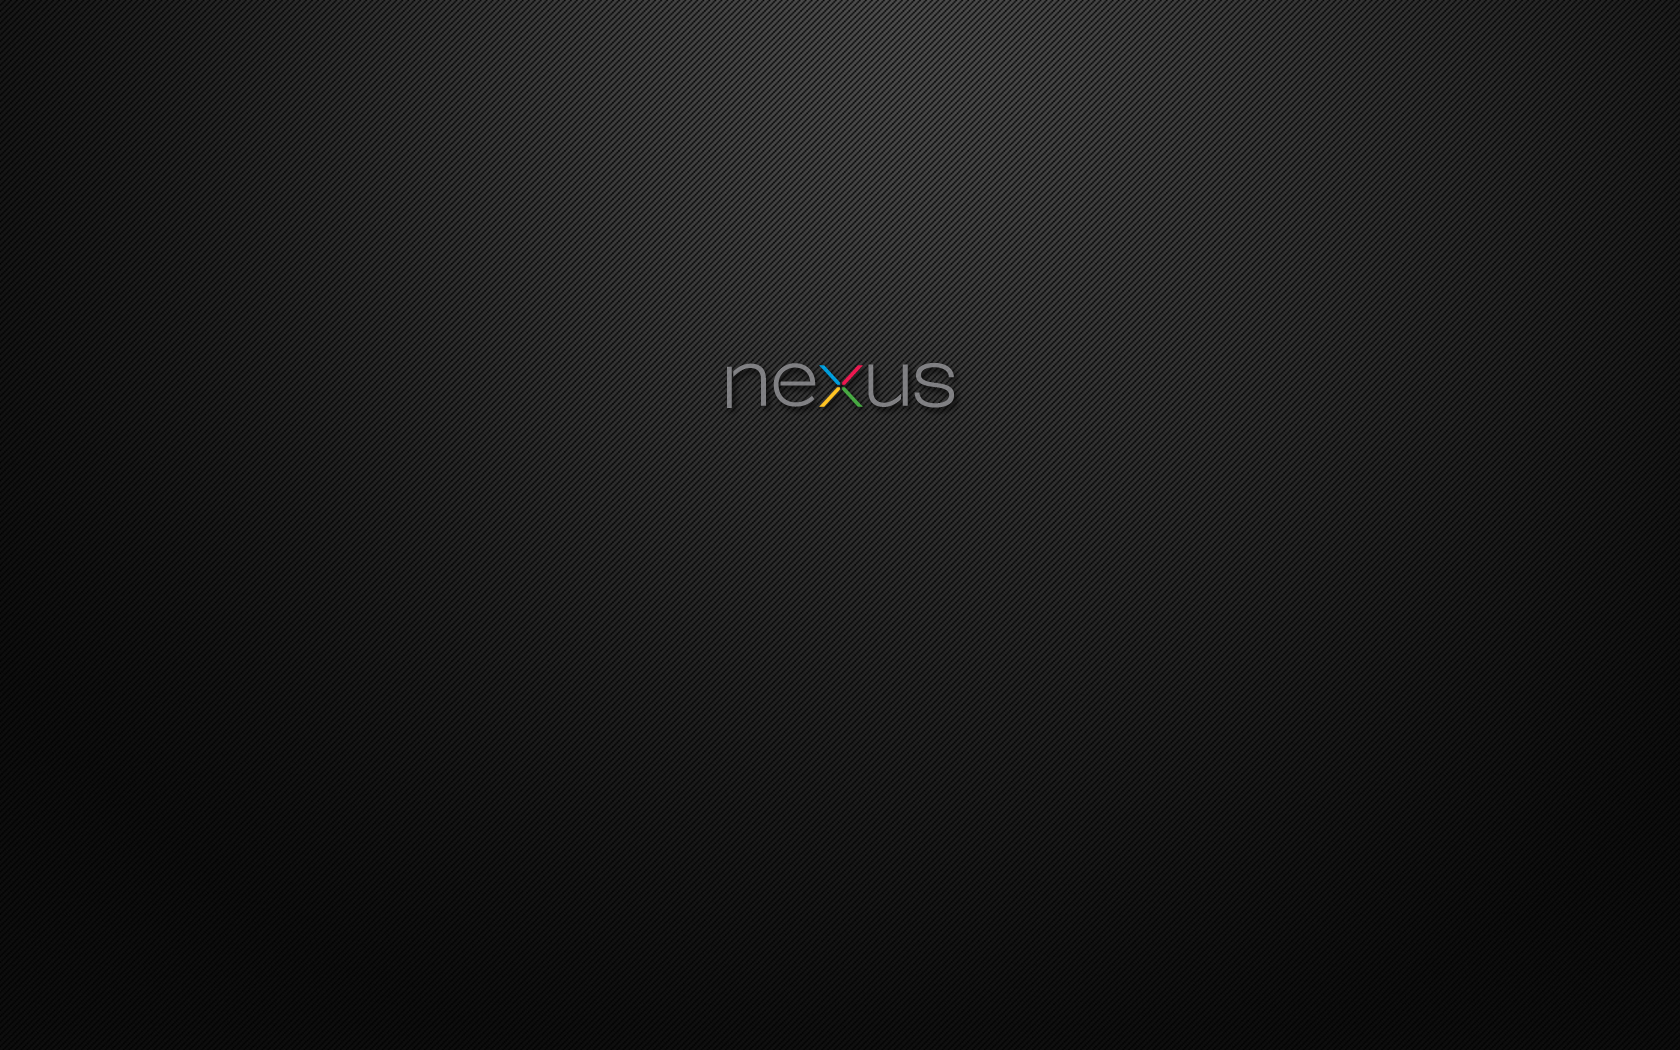 nexus 4 wallpaper size